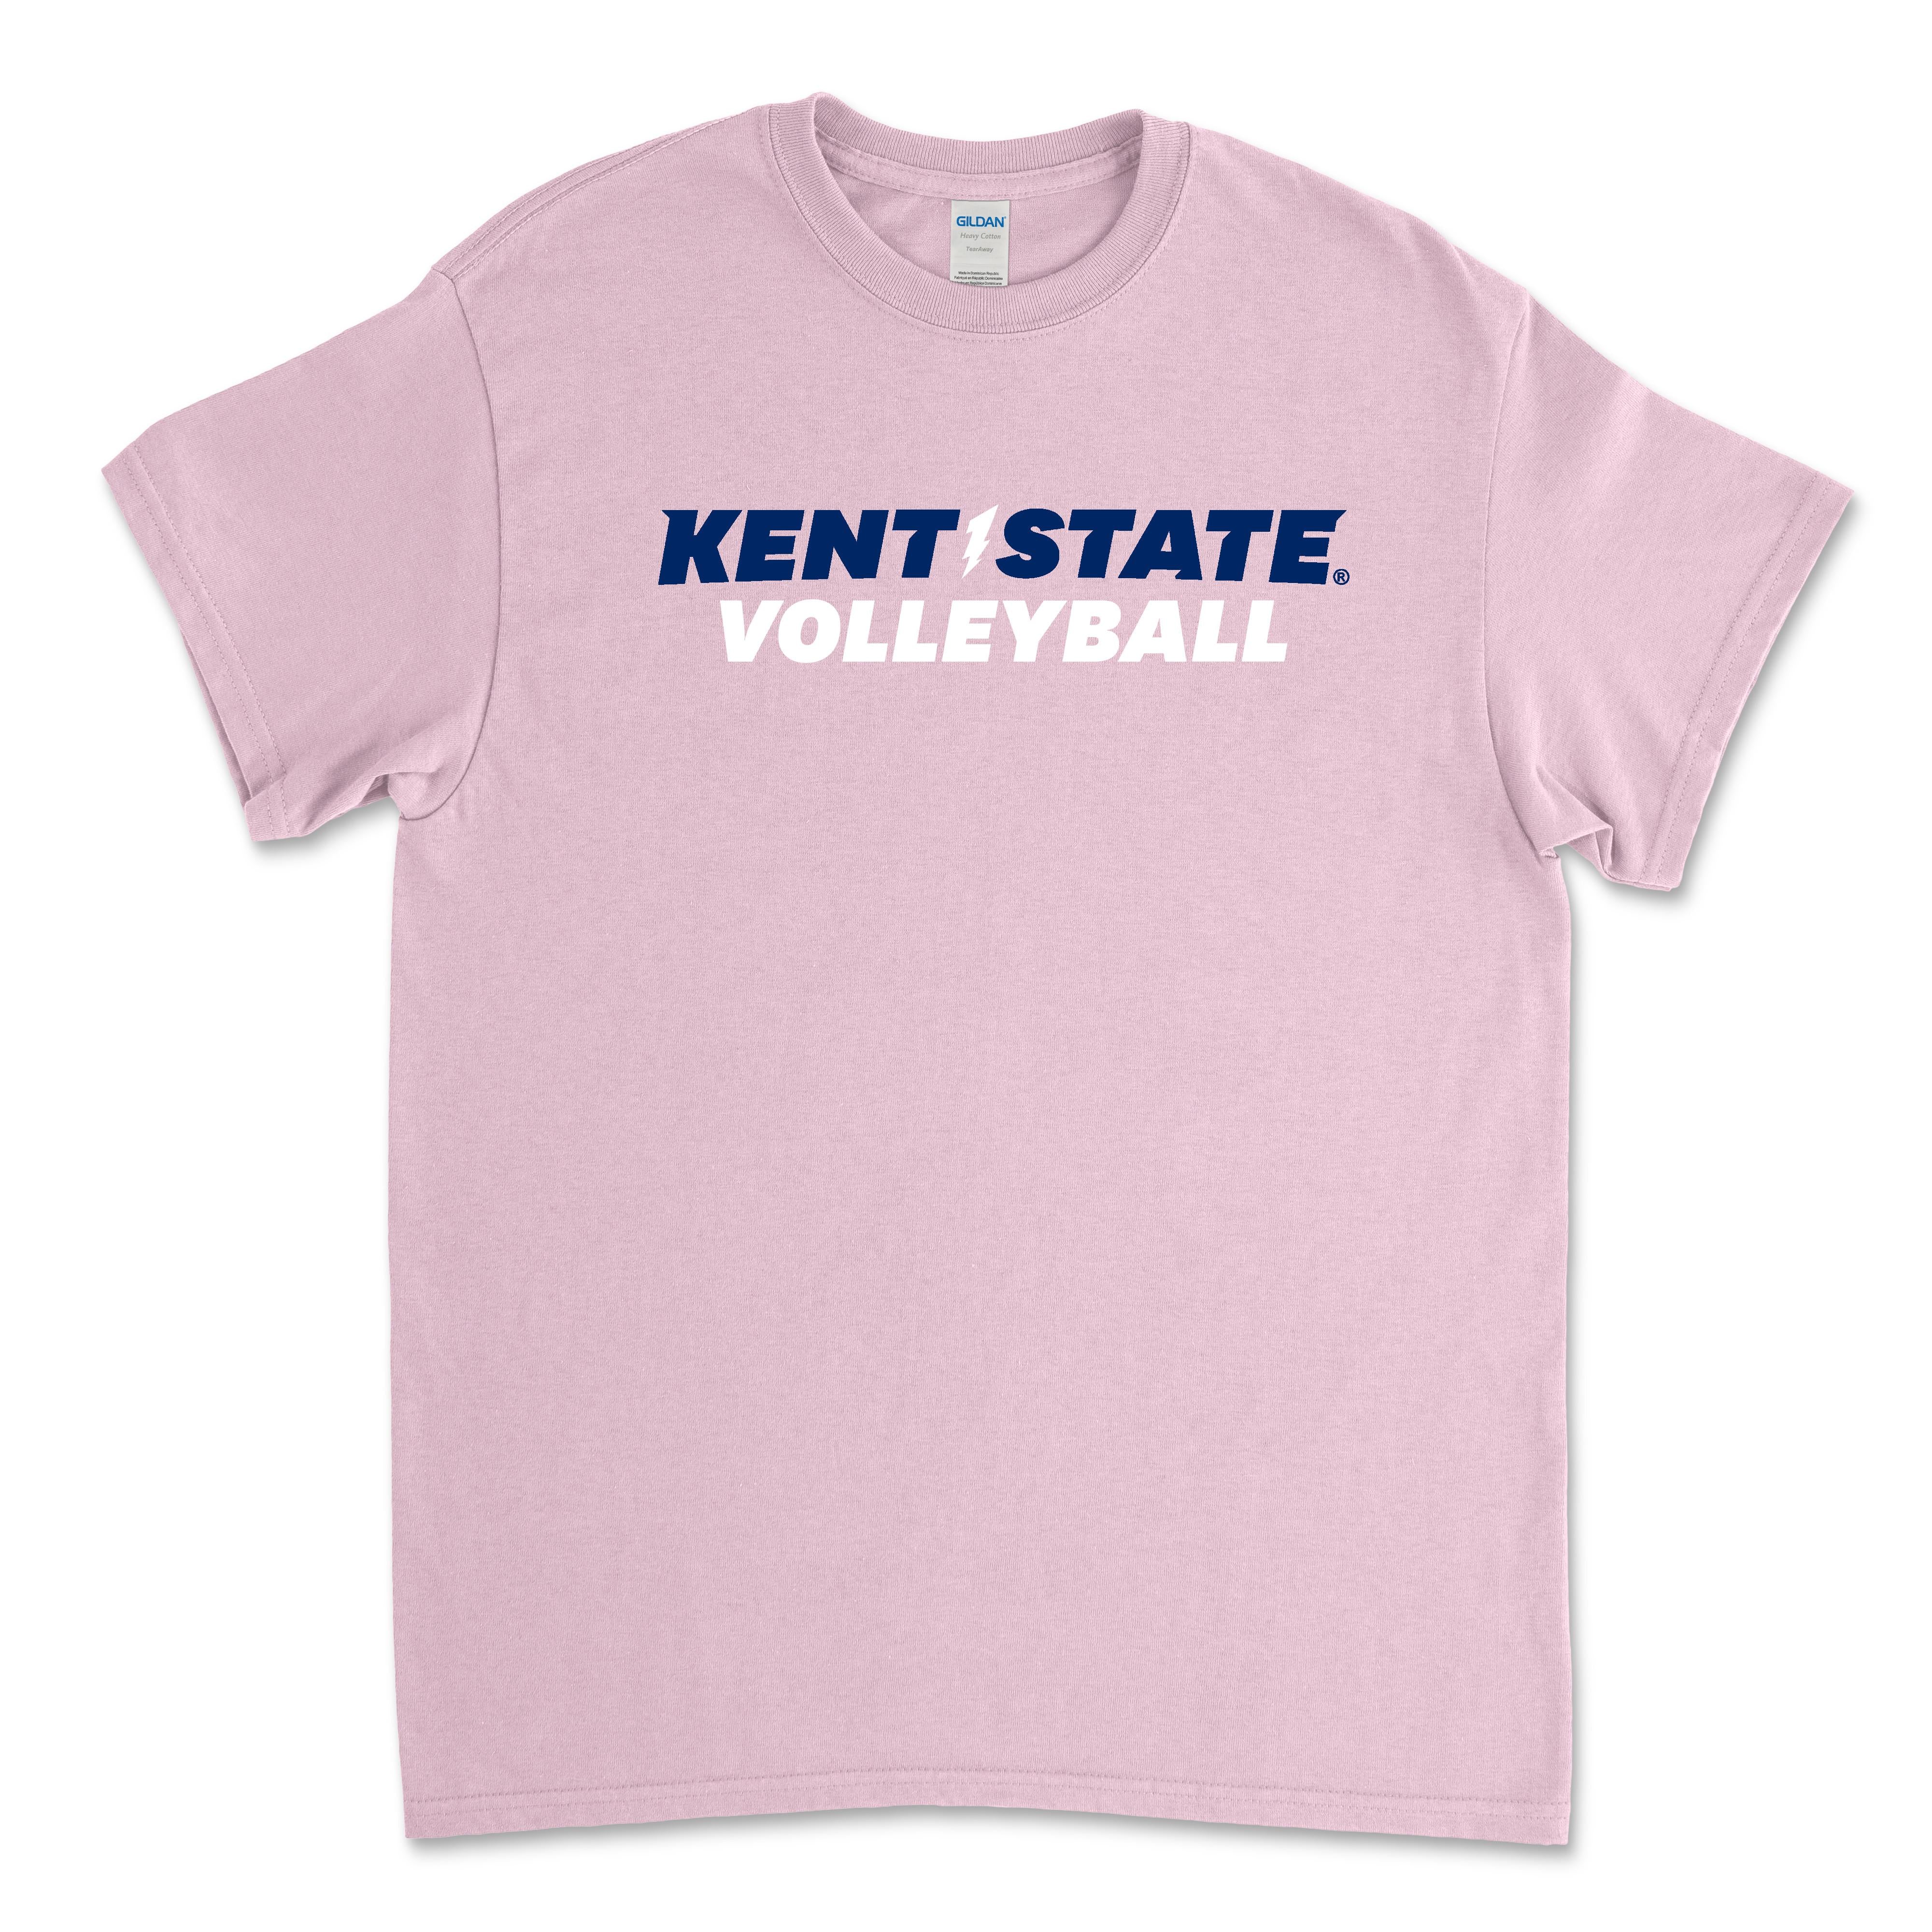 Kent State University Pink Volleyball T-Shirt